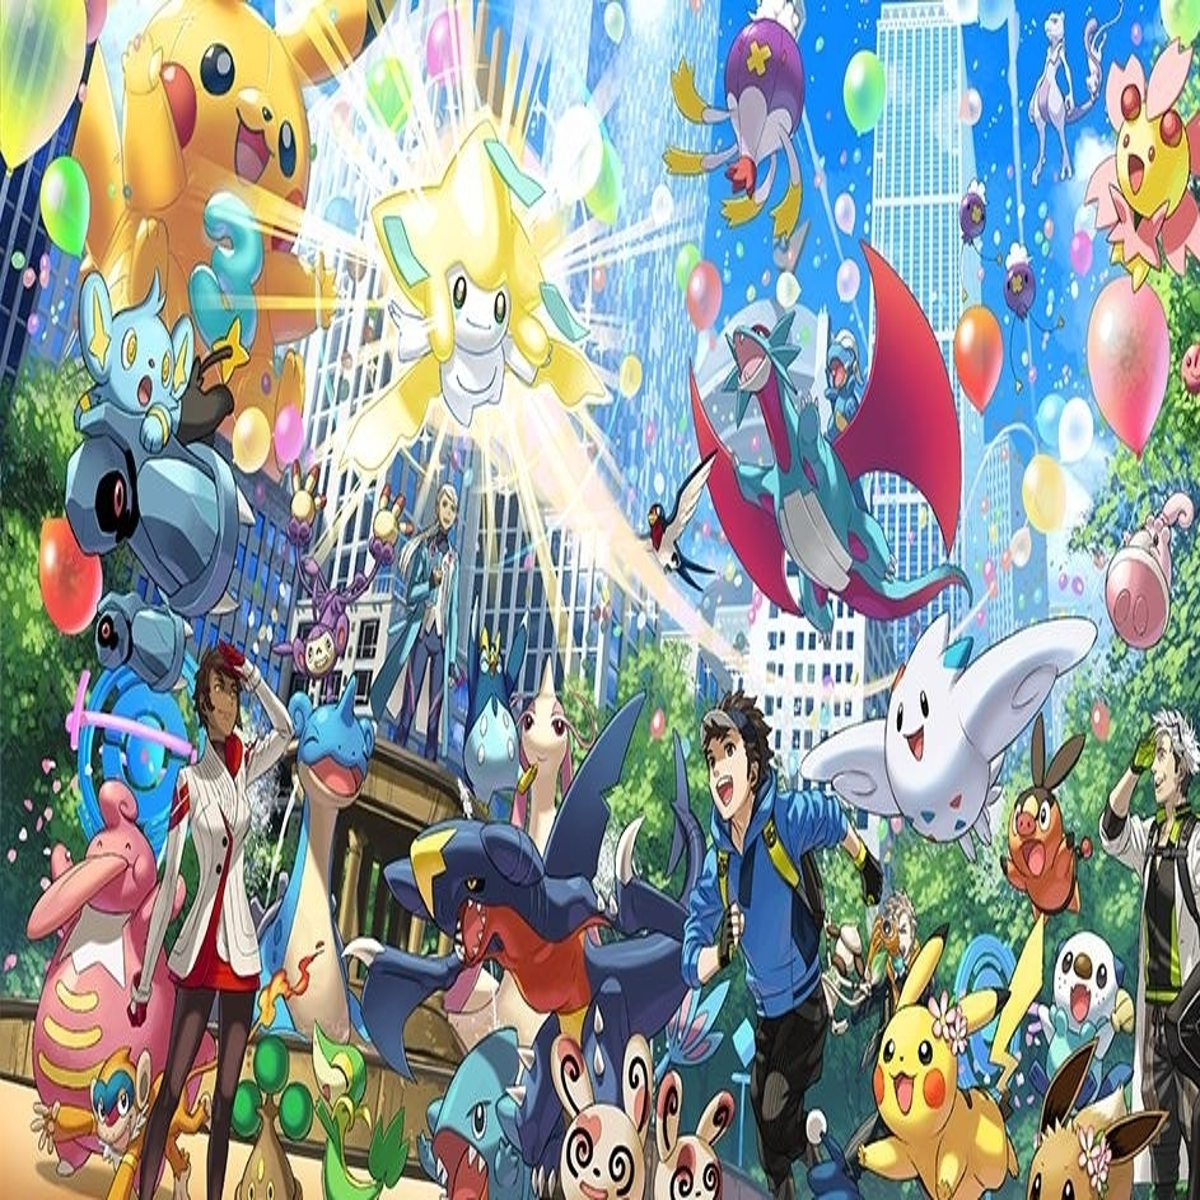 Pokemon Go shiny Pokemon guide: How to catch rare shiny Pokemon - Tips and  tricks, Gaming, Entertainment